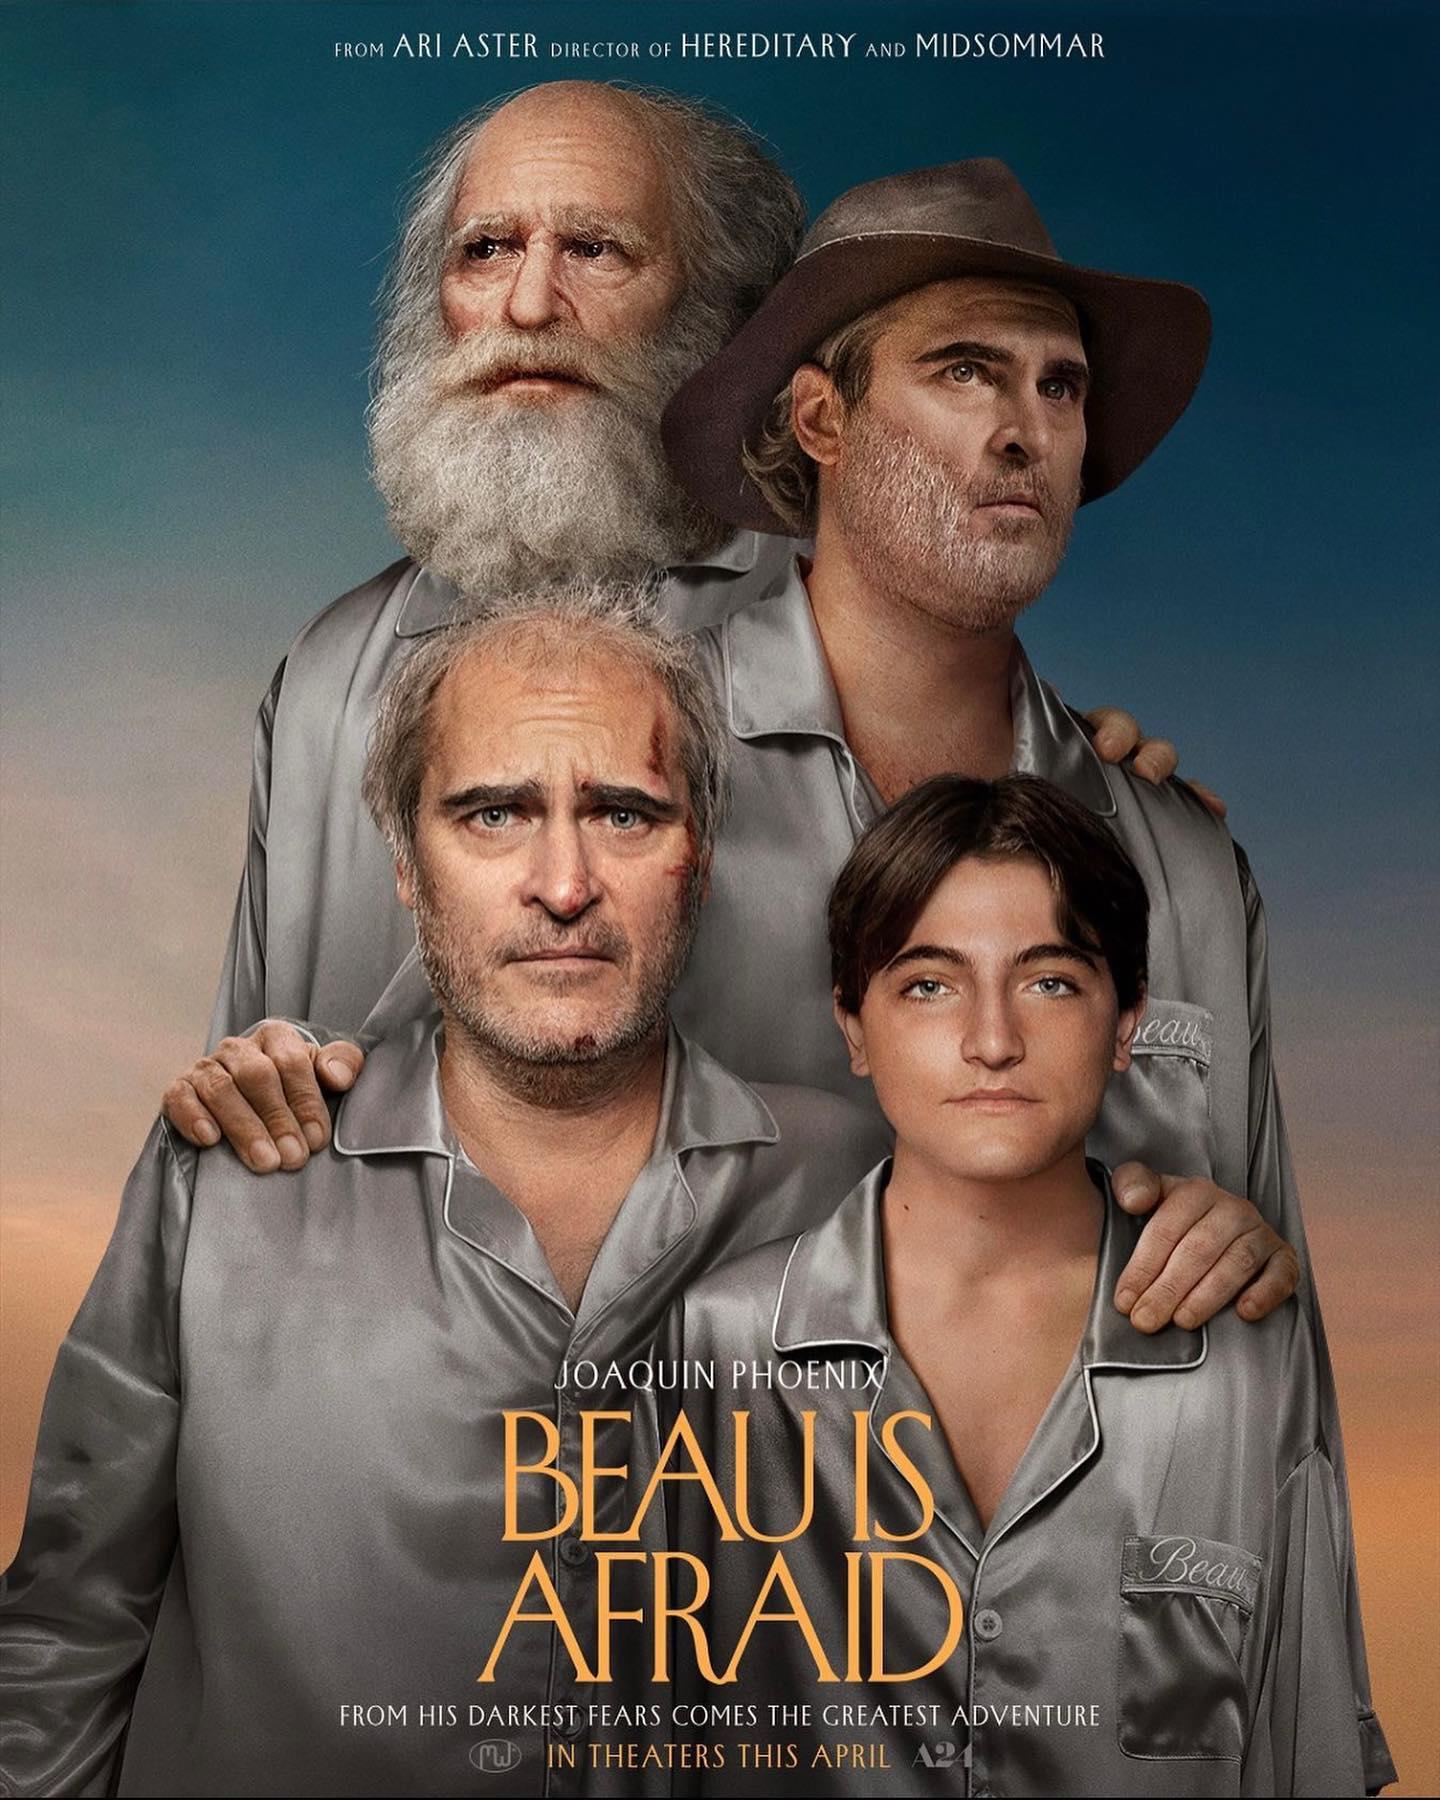 $!Lanzan poster oficial de la película ‘Beau is afraid’ protagonizada por Joaquin Phoenix